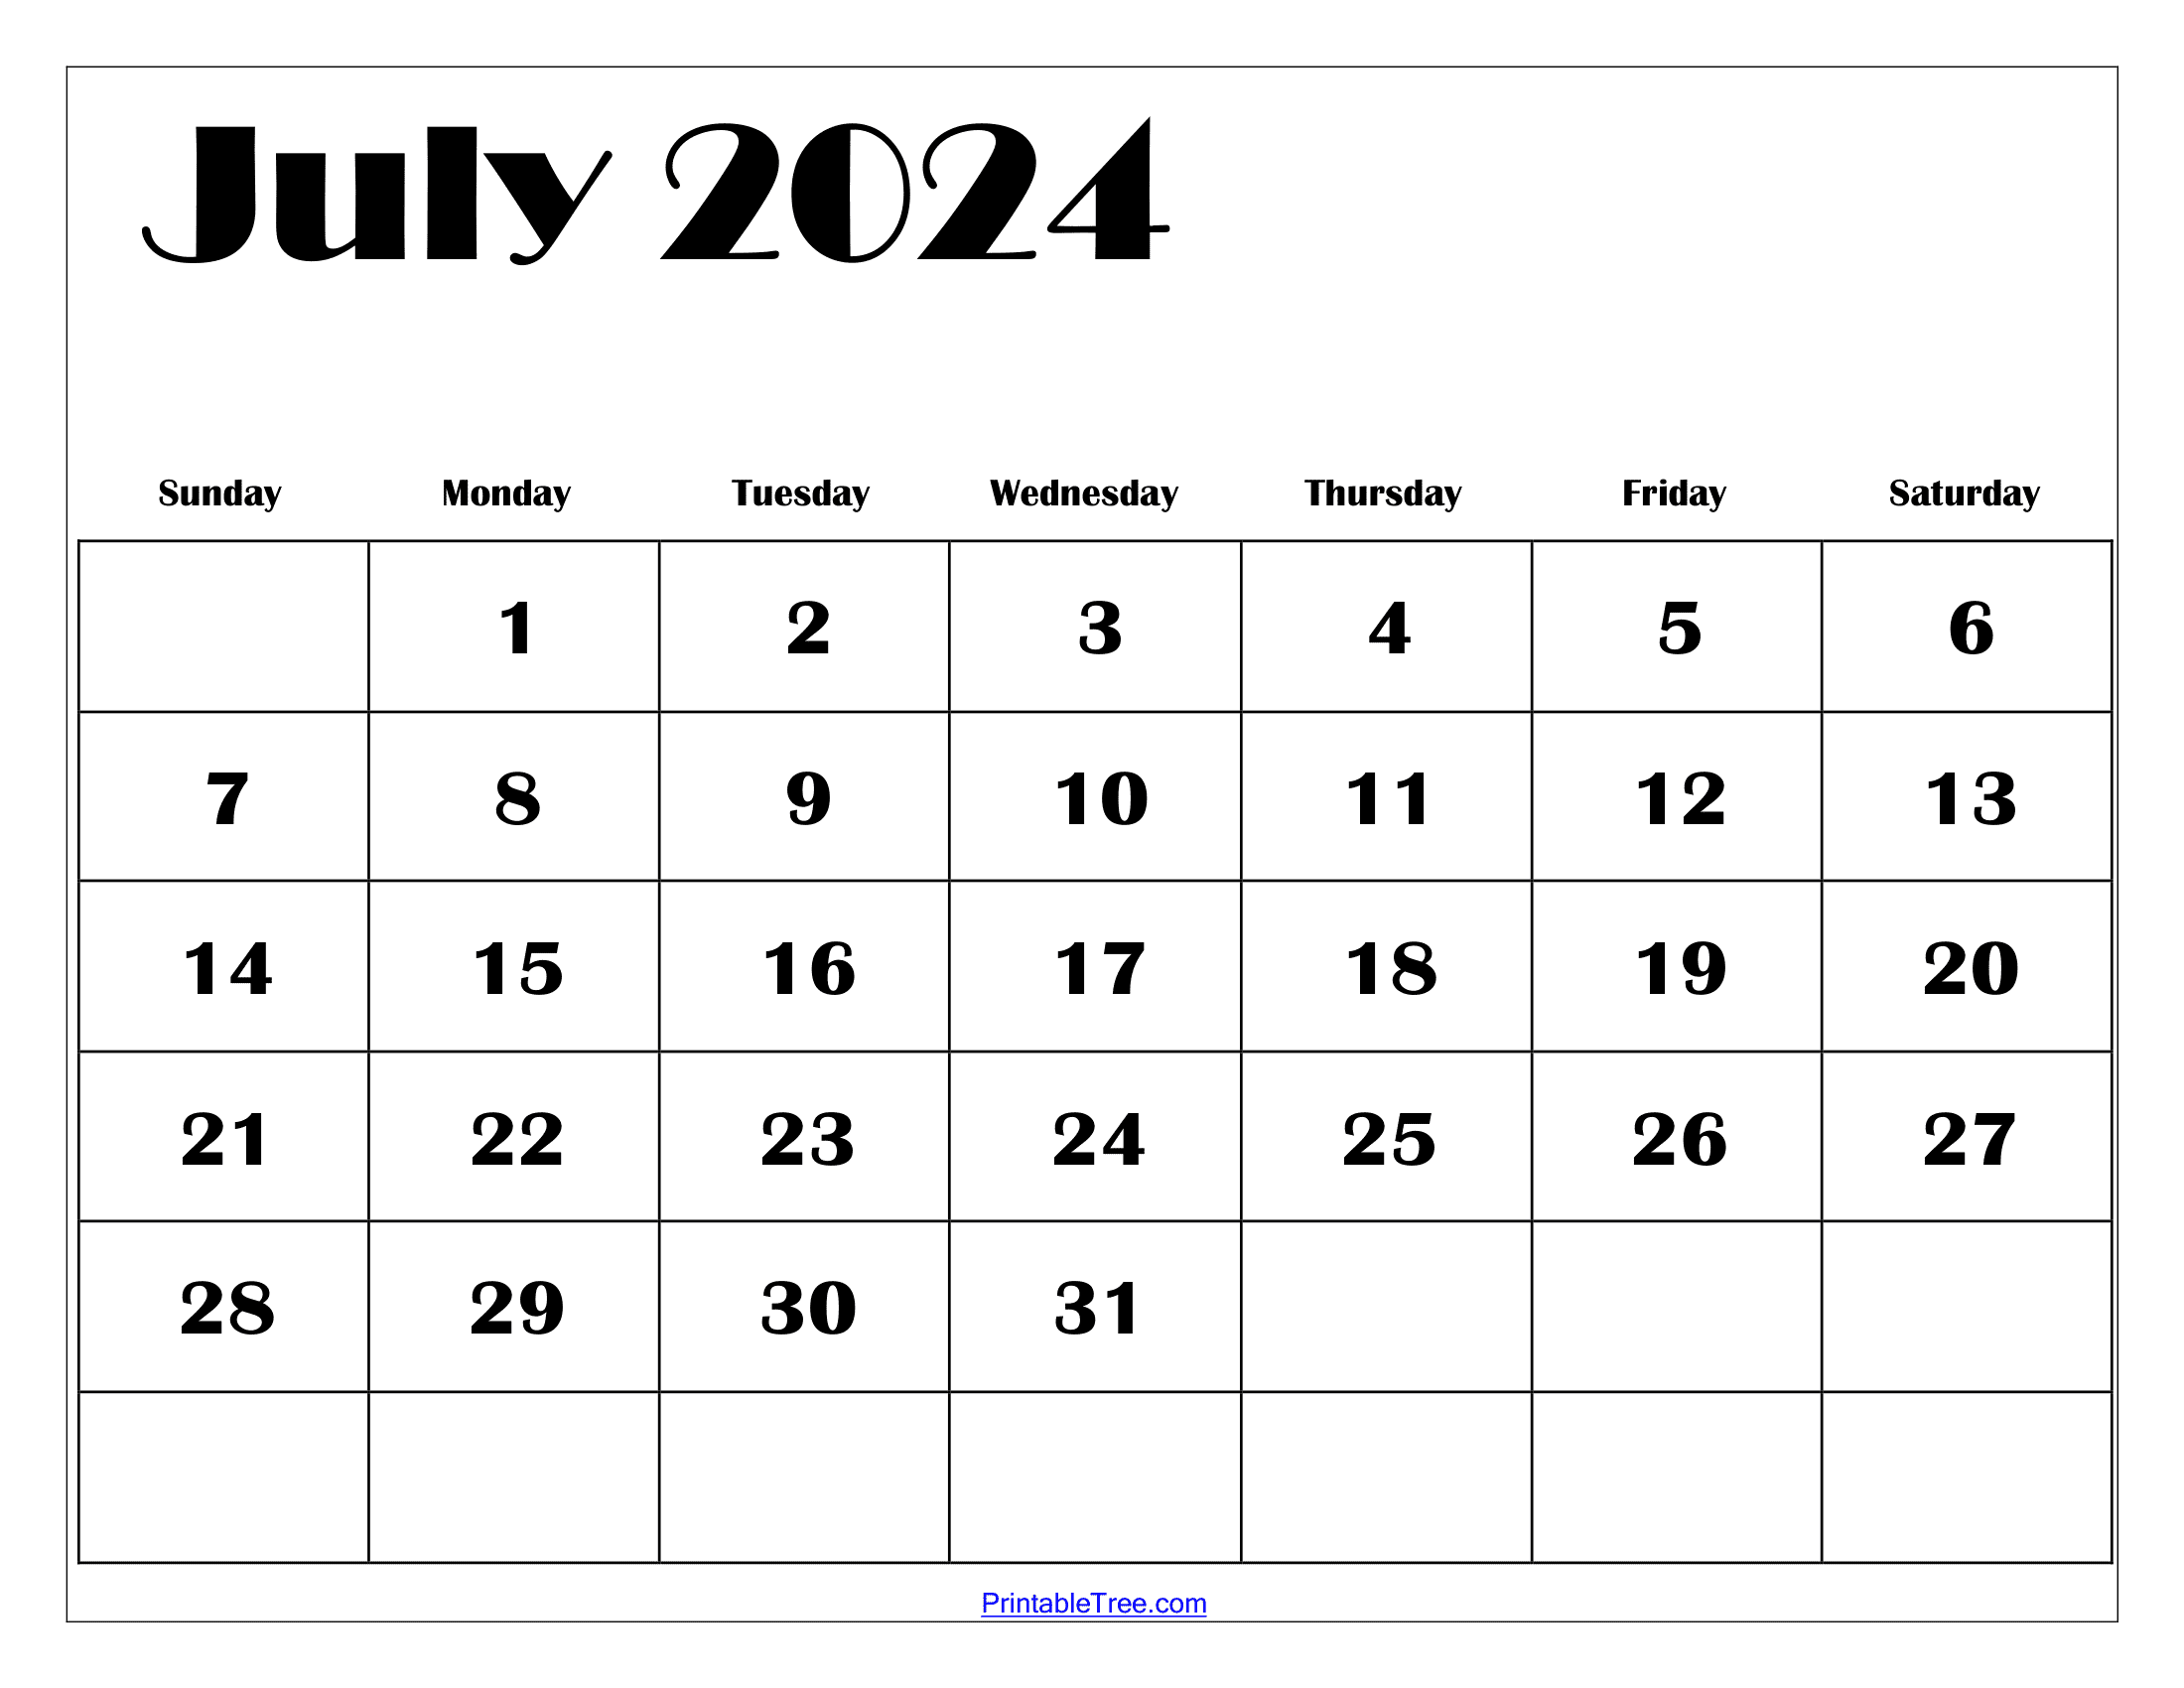 July 2024 Calendar Printable Pdf With Holidays Free Template for Blank July 2024 Calendar Printable